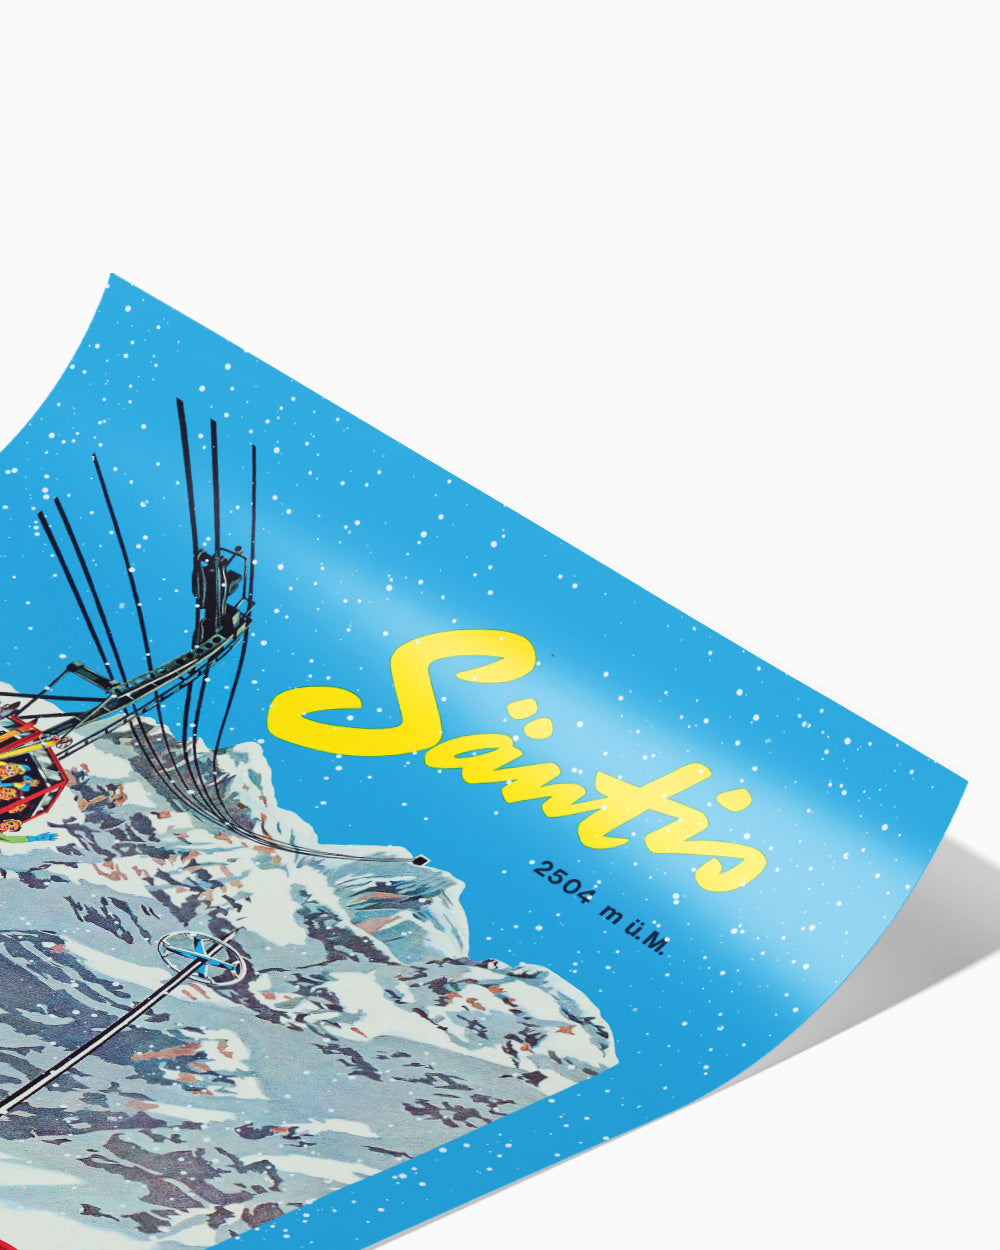 Santis Ski Print Art Print | Wall Art